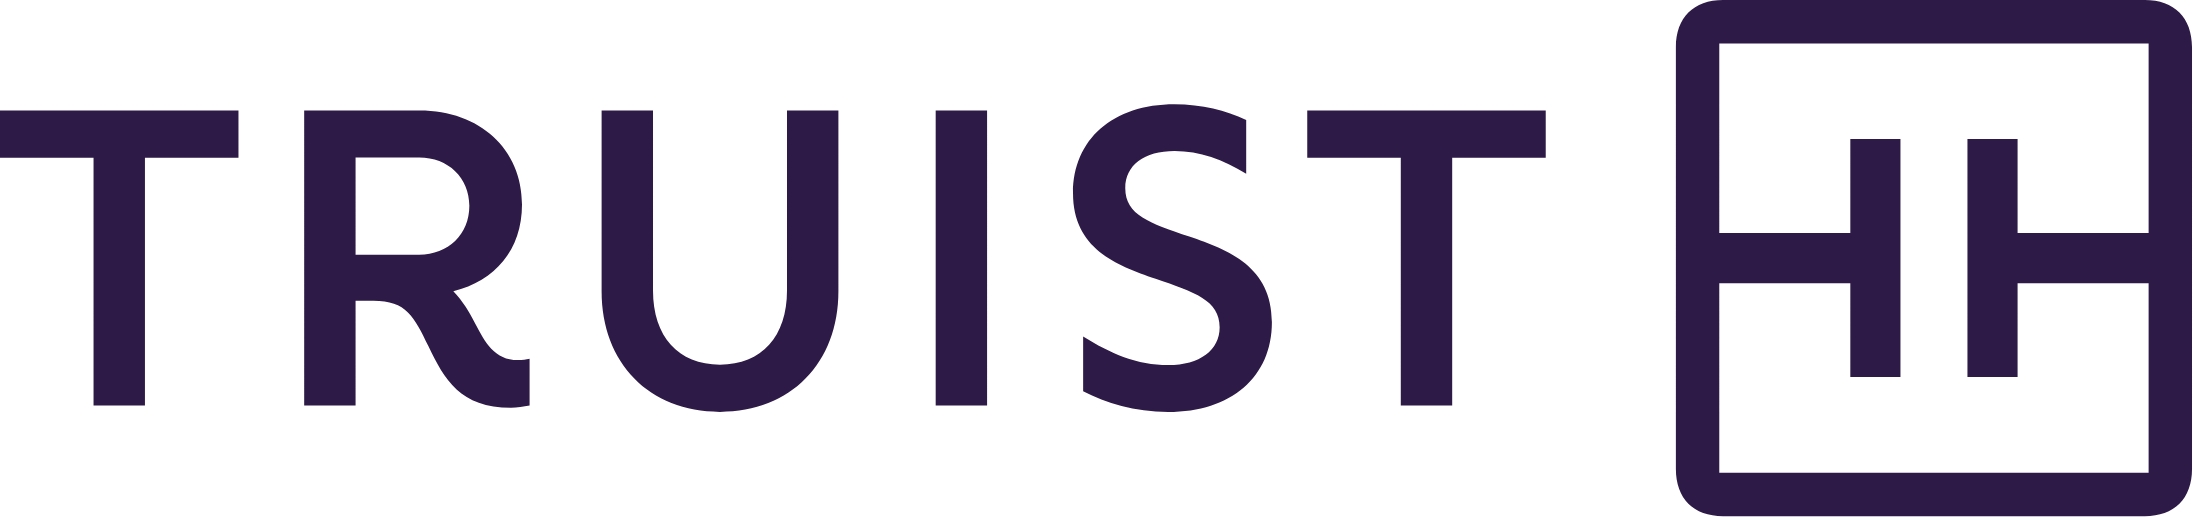 truist-logo-purple